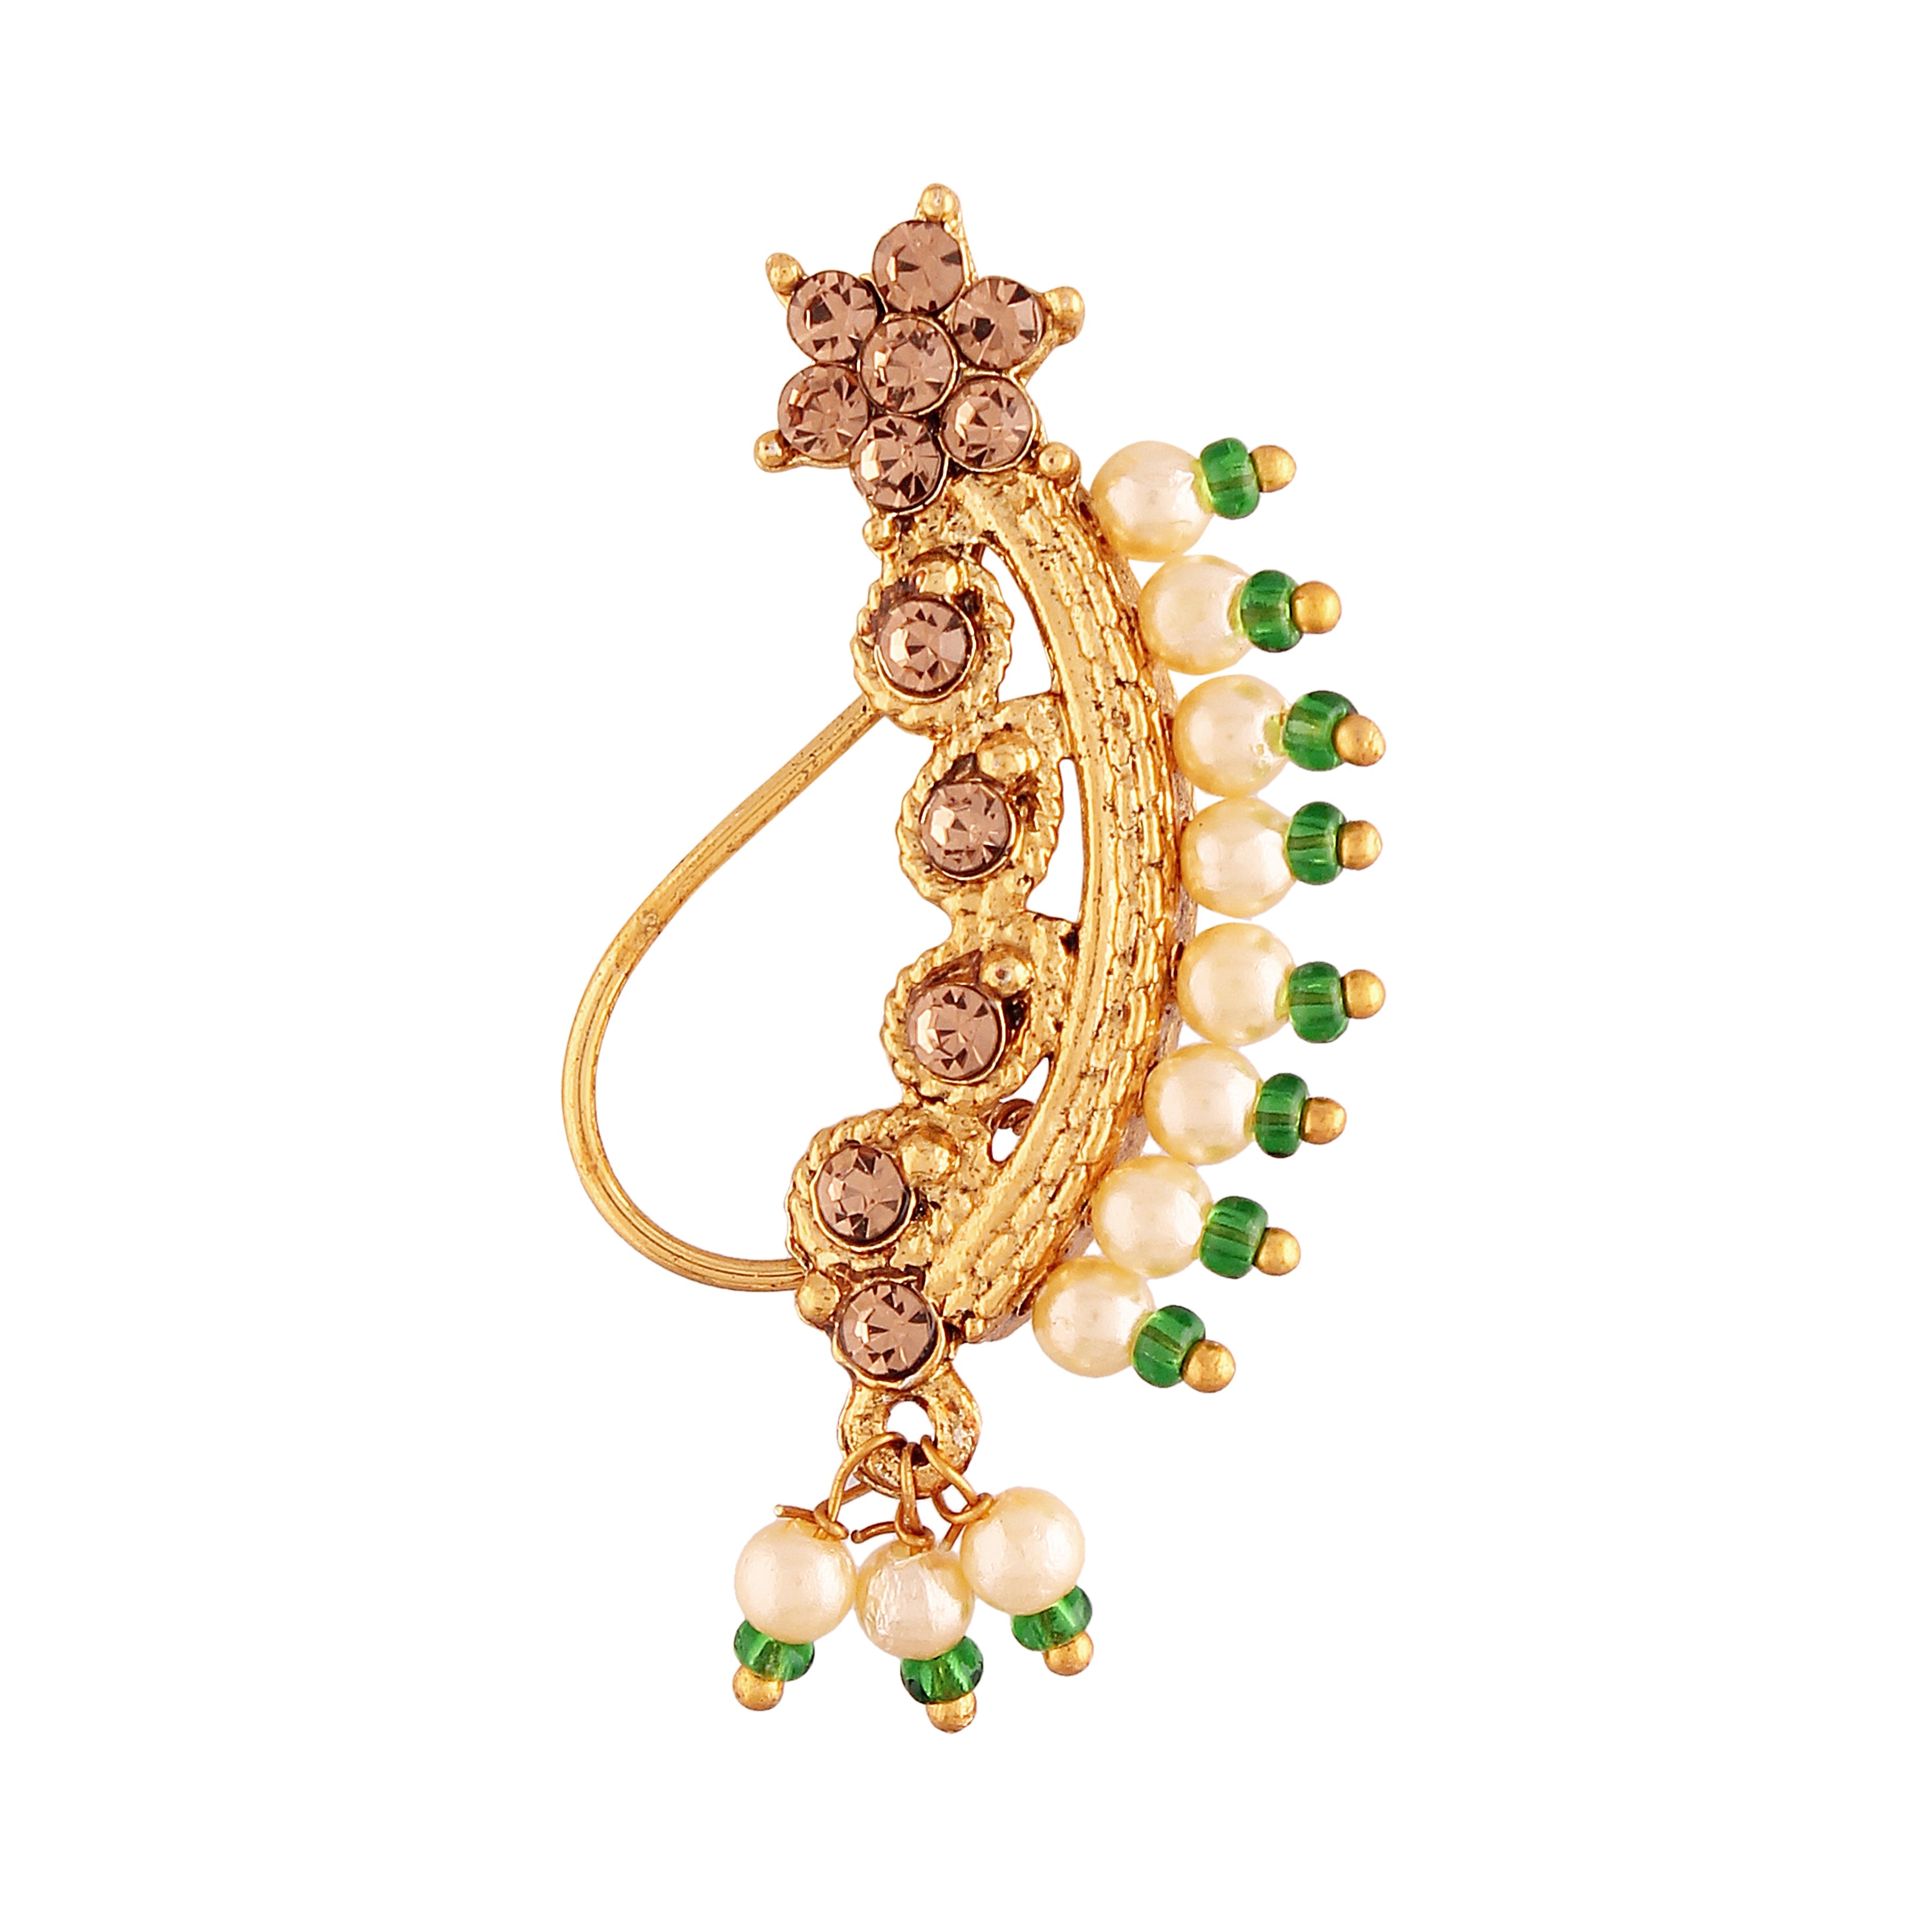 Buy Antique Maharashtrian Nath With Gold Plating 213153 | Kanhai Jewels